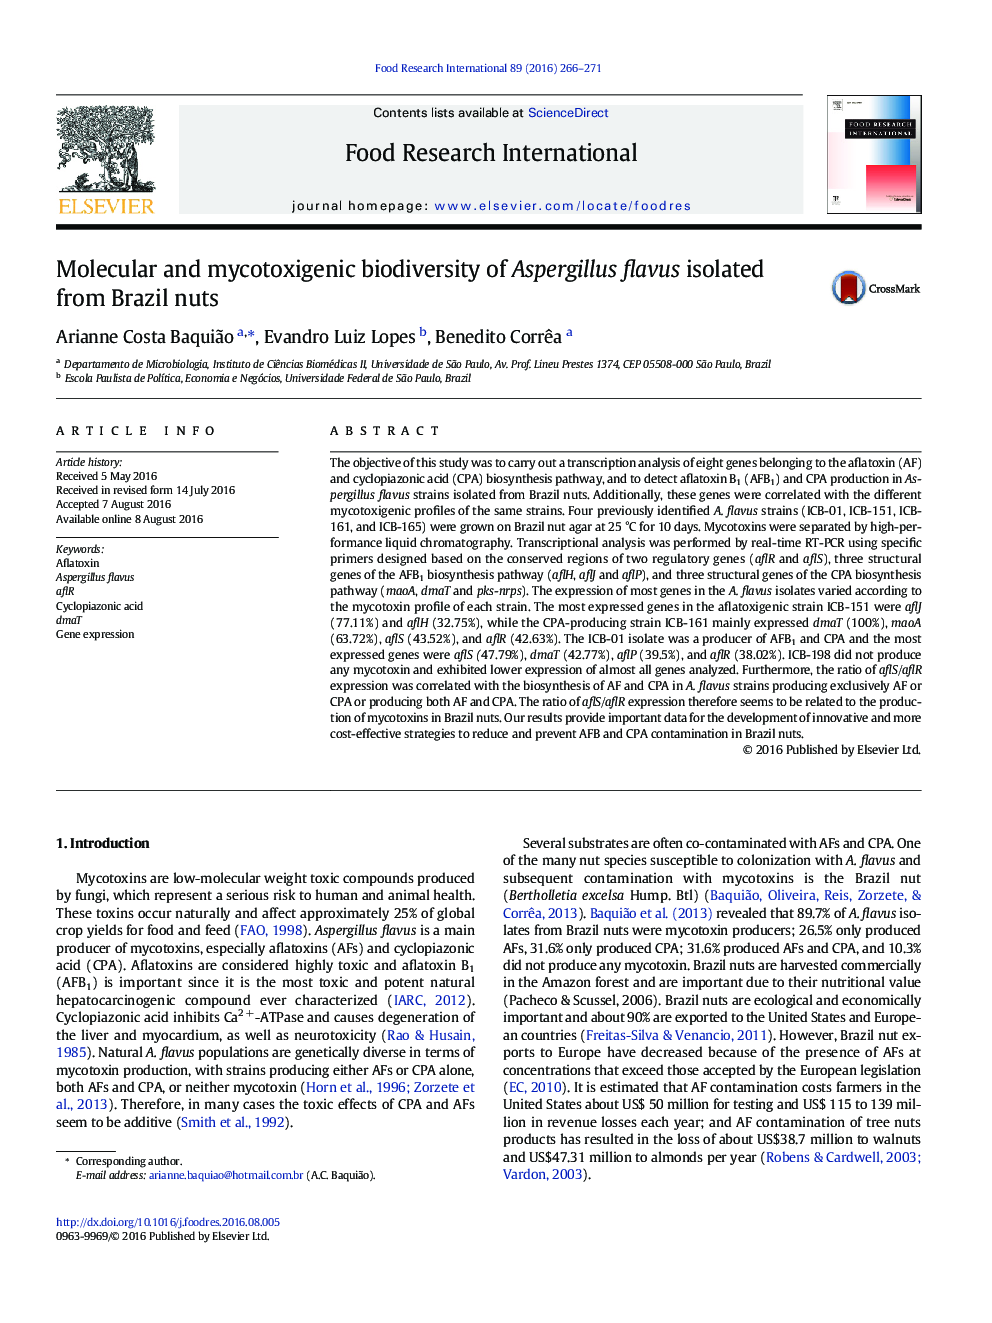 Molecular and mycotoxigenic biodiversity of Aspergillus flavus isolated from Brazil nuts